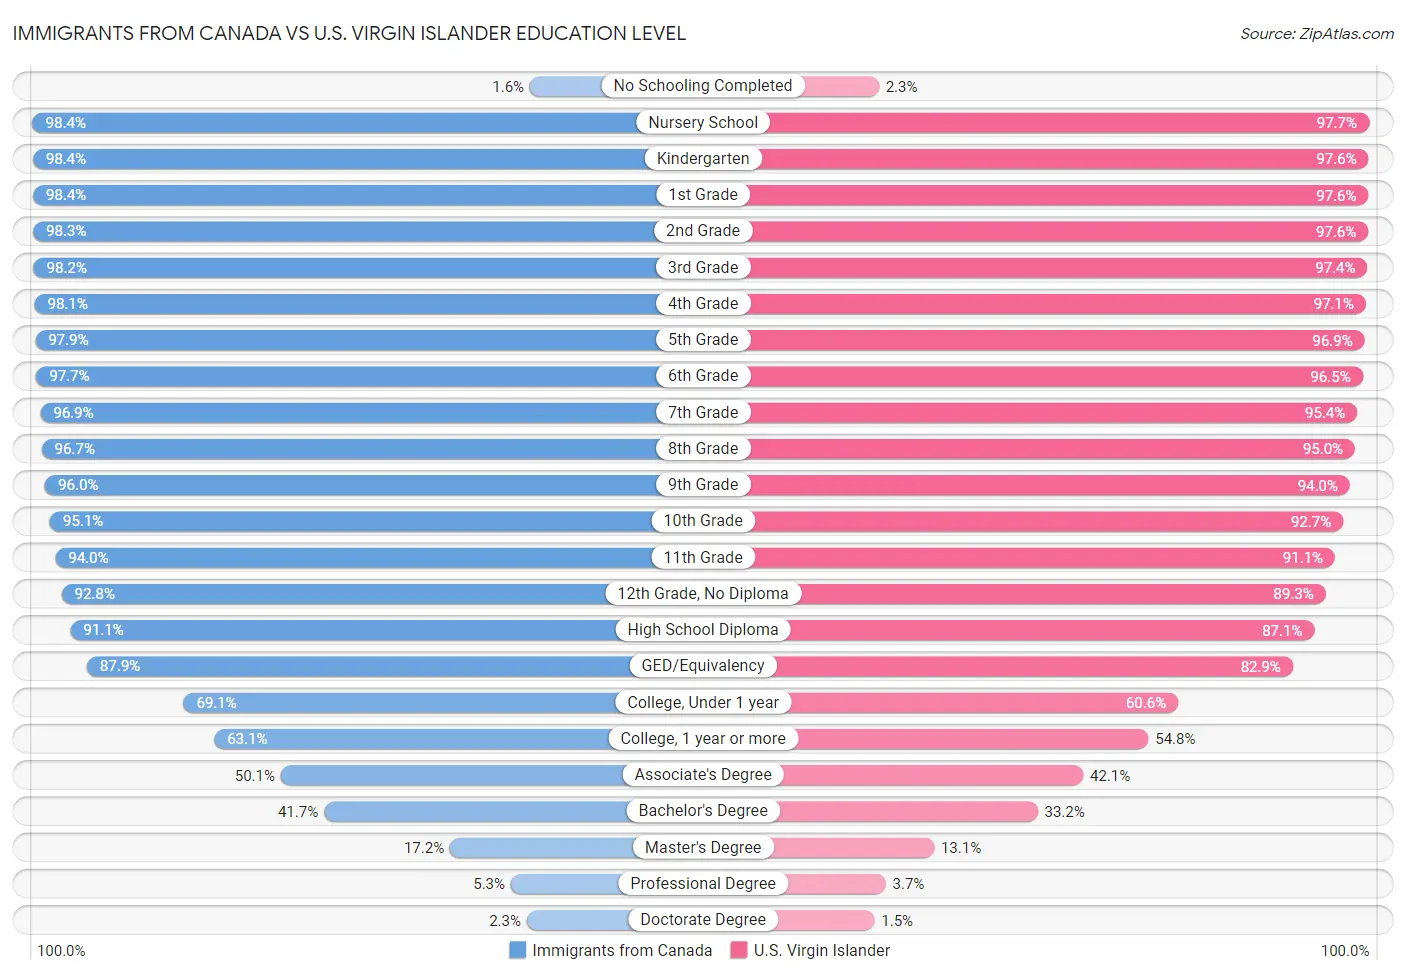 Immigrants from Canada vs U.S. Virgin Islander Education Level